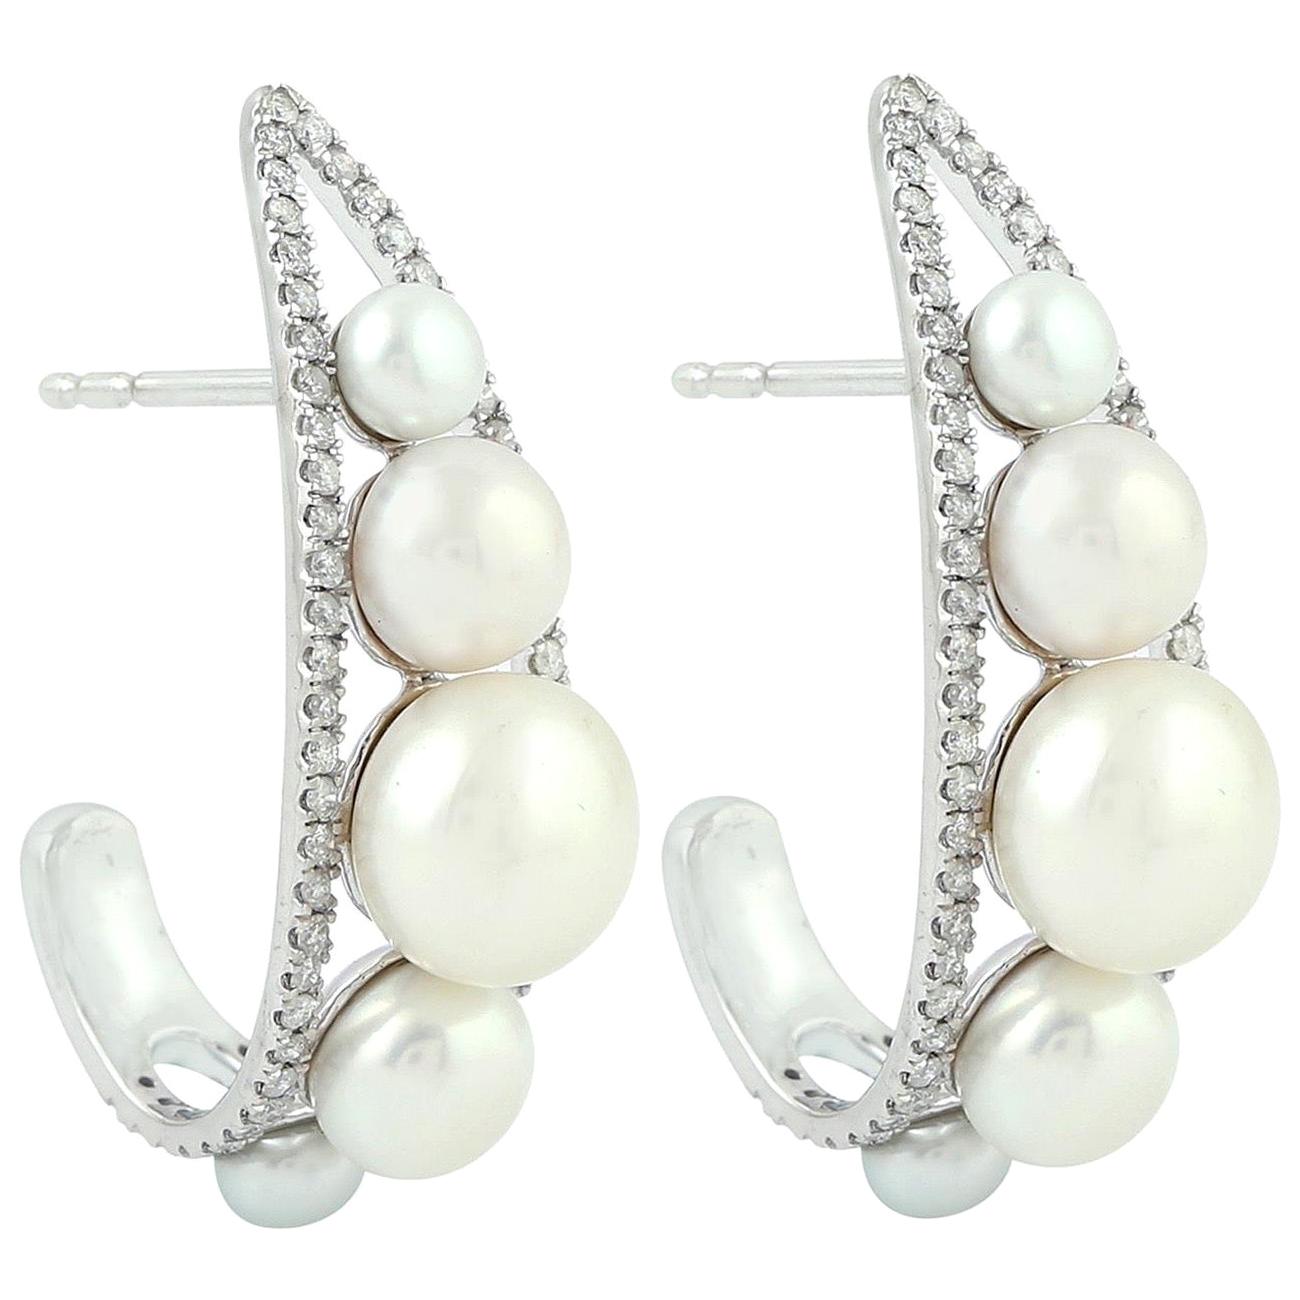 Perlen-Diamant-Ohrringe aus 18 Karat Gold